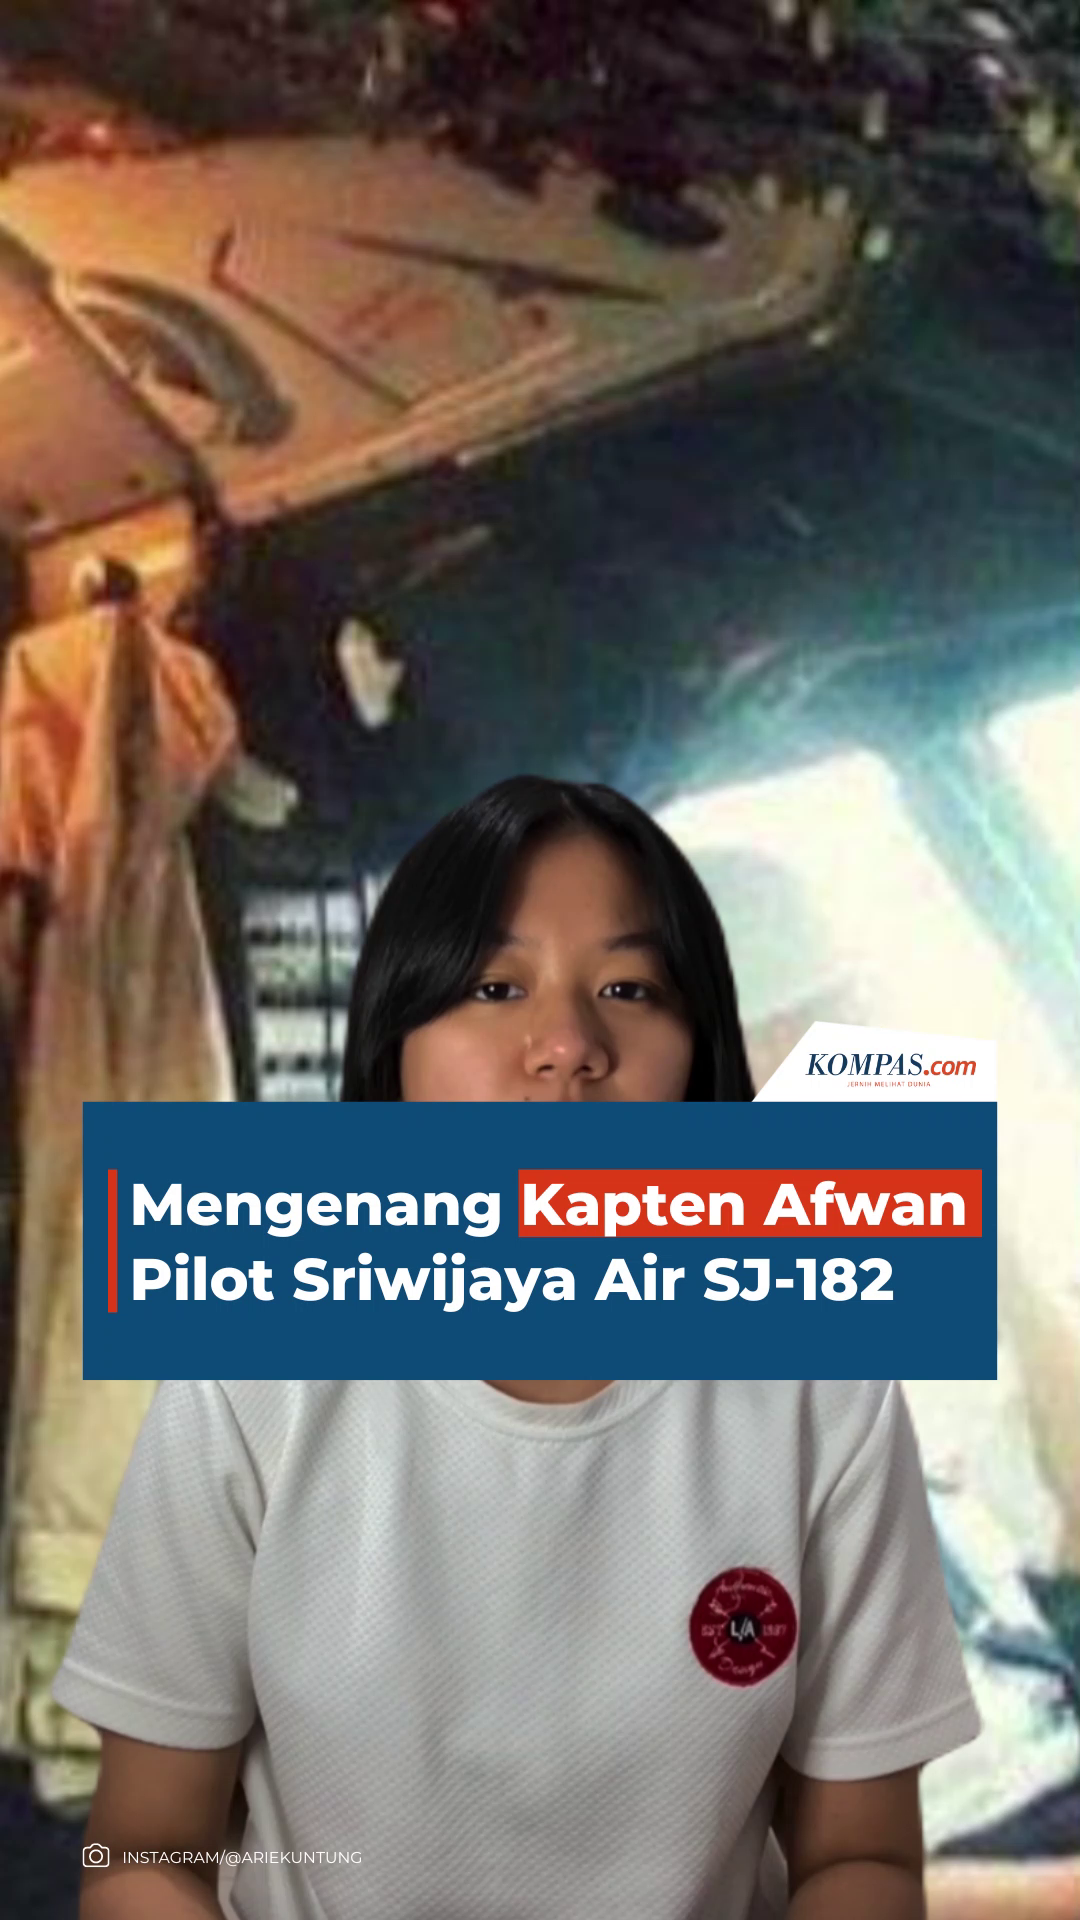 Mengenang Kapten Afwan, Pilot Sriwijaya Air SJ-182